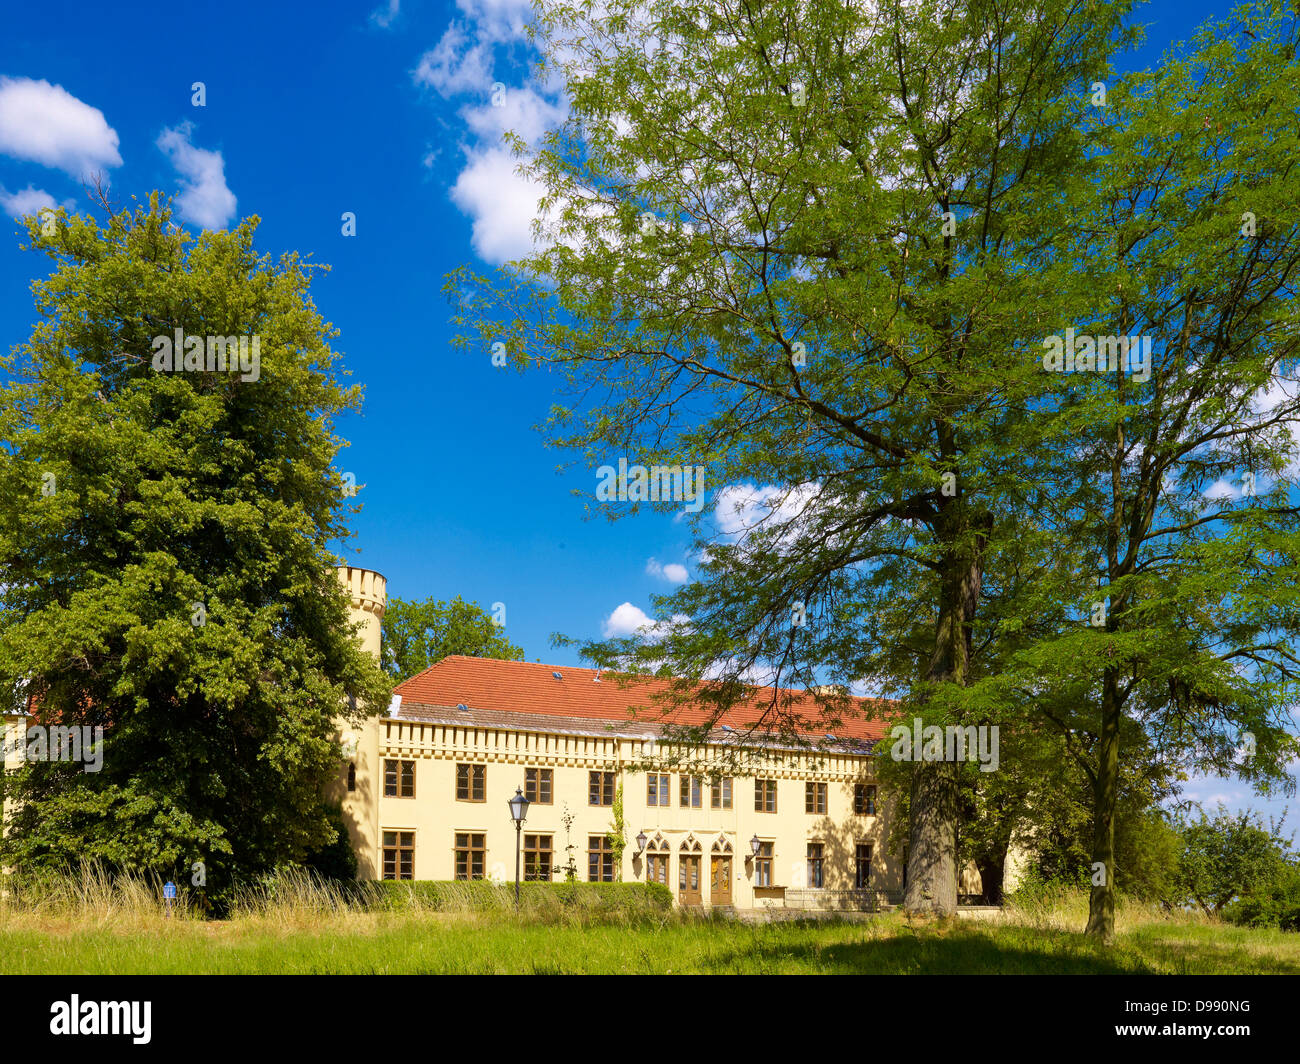 Castle Petzow at Lake Schwielow, Petzow, Brandenburg, Germany Stock Photo